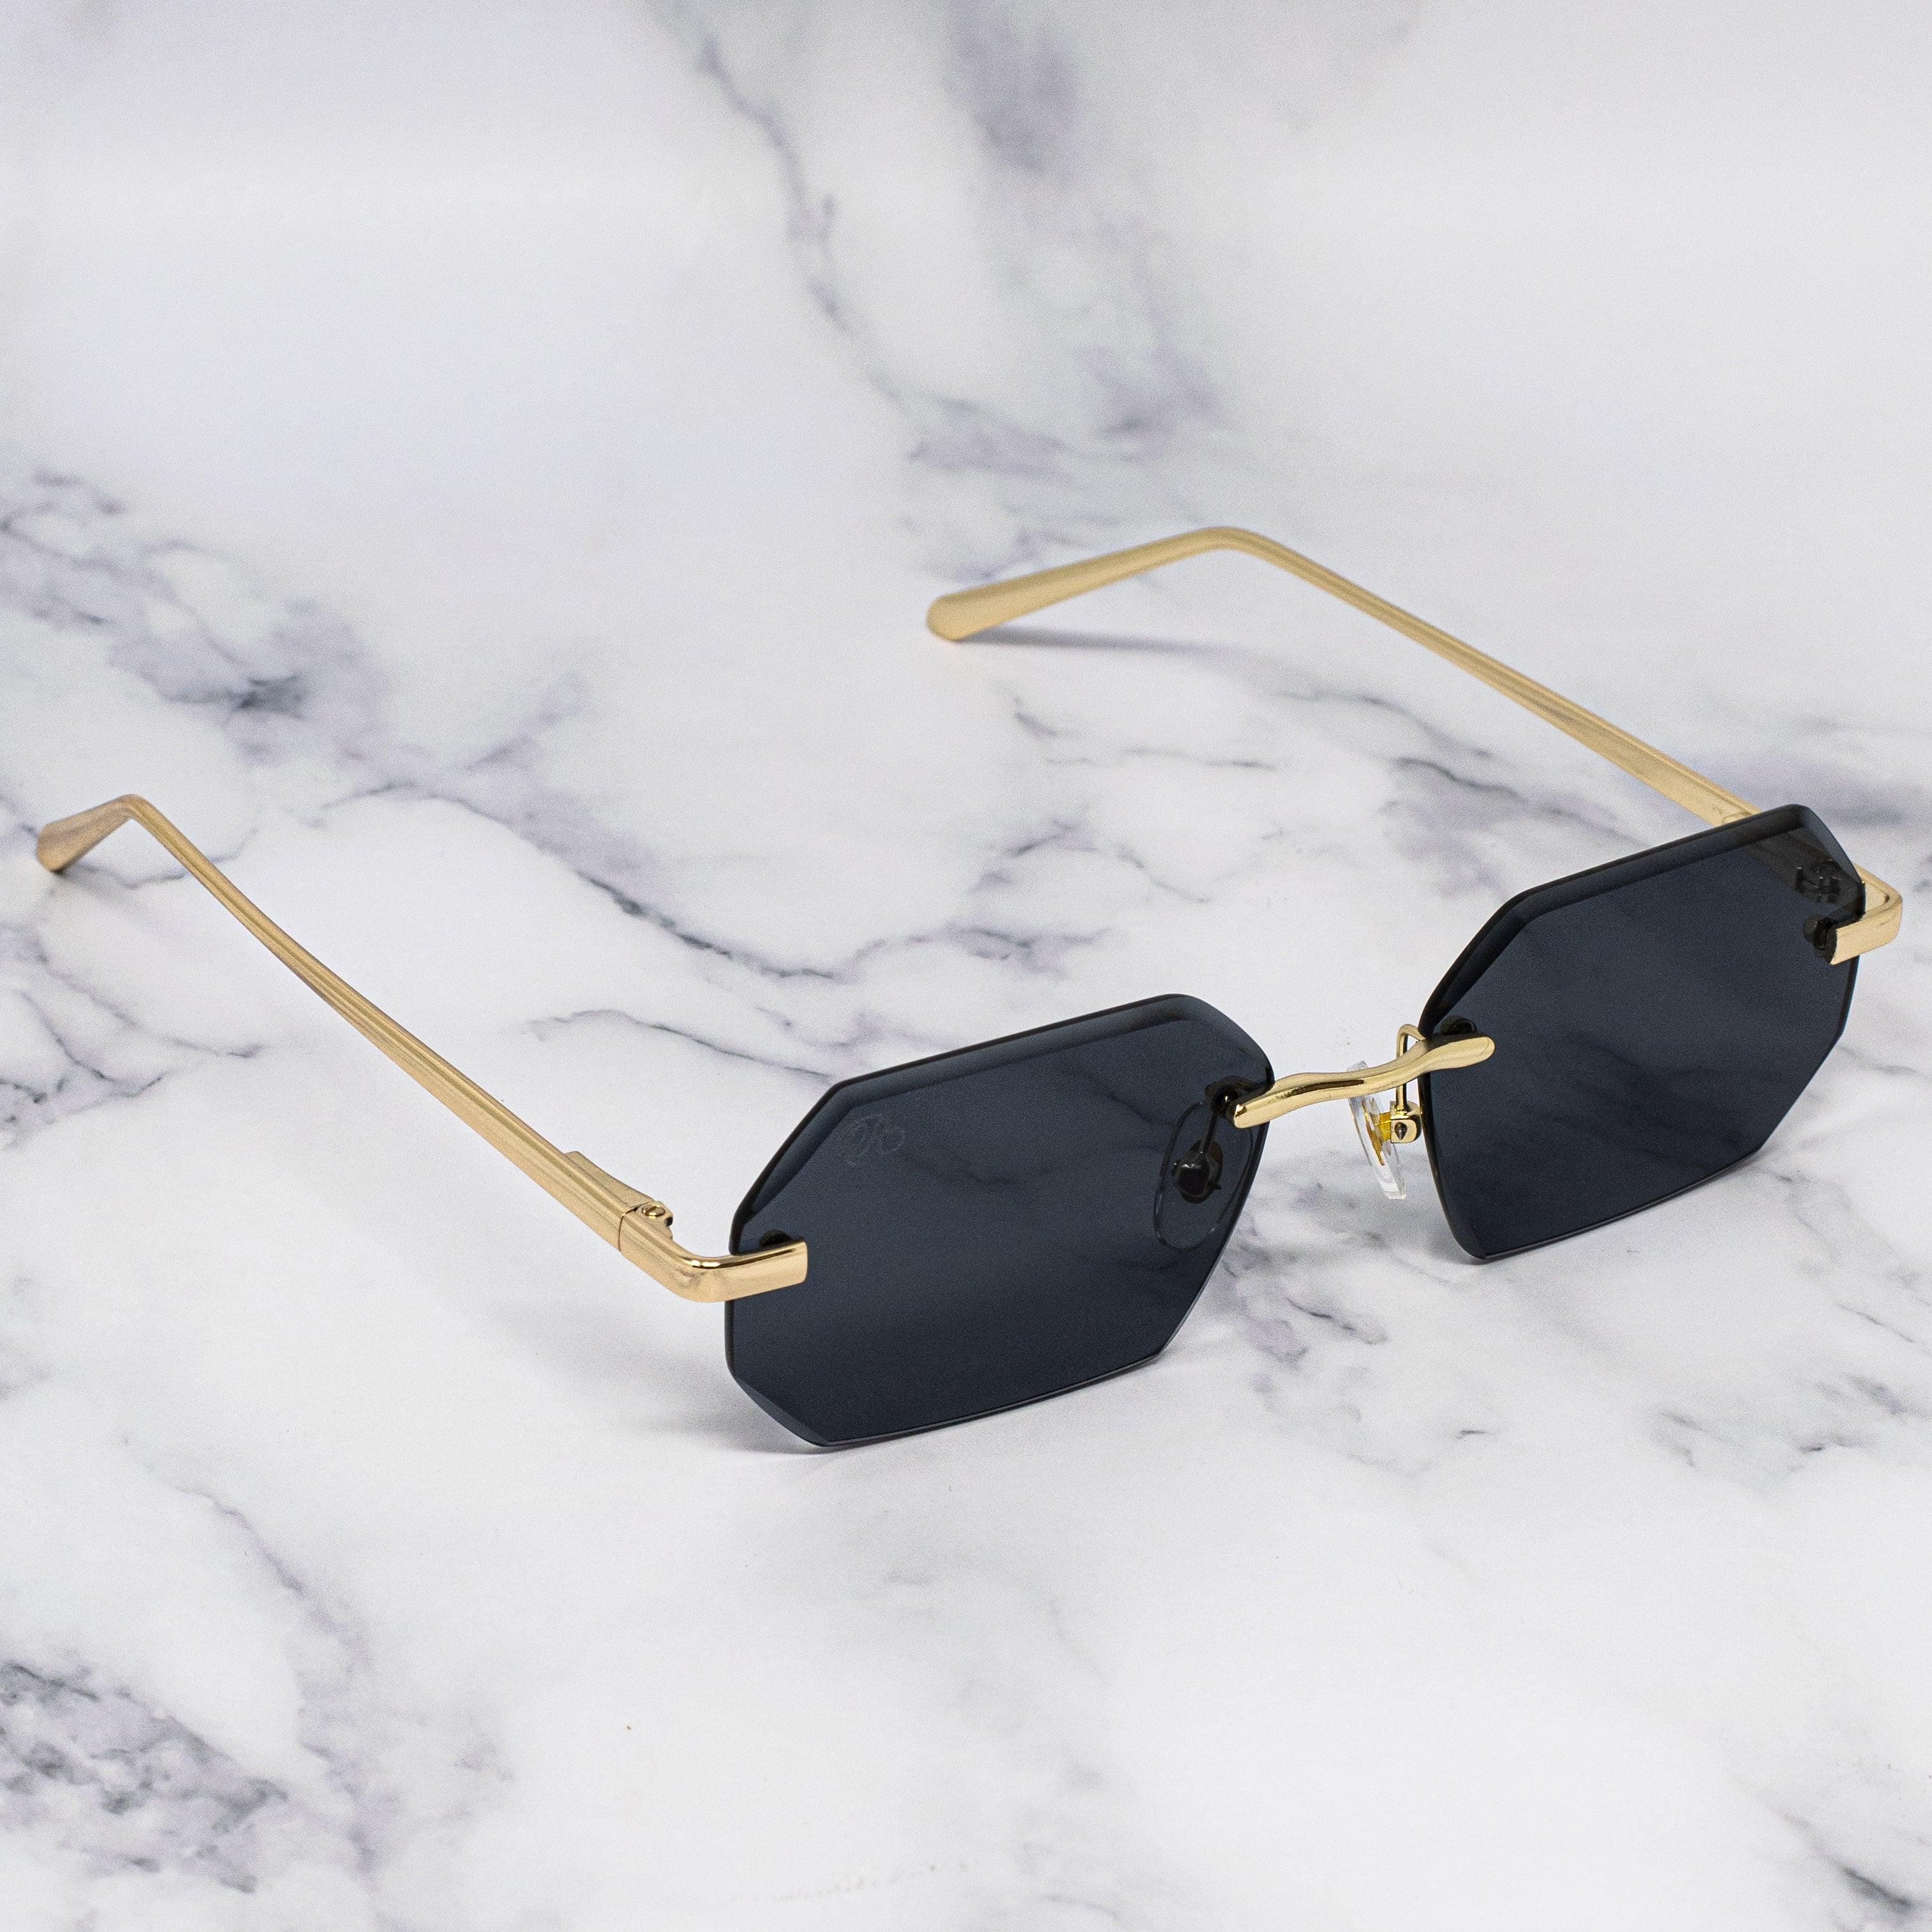 THE REVERIE - BLACK GOLD - Rasa Sunglasses